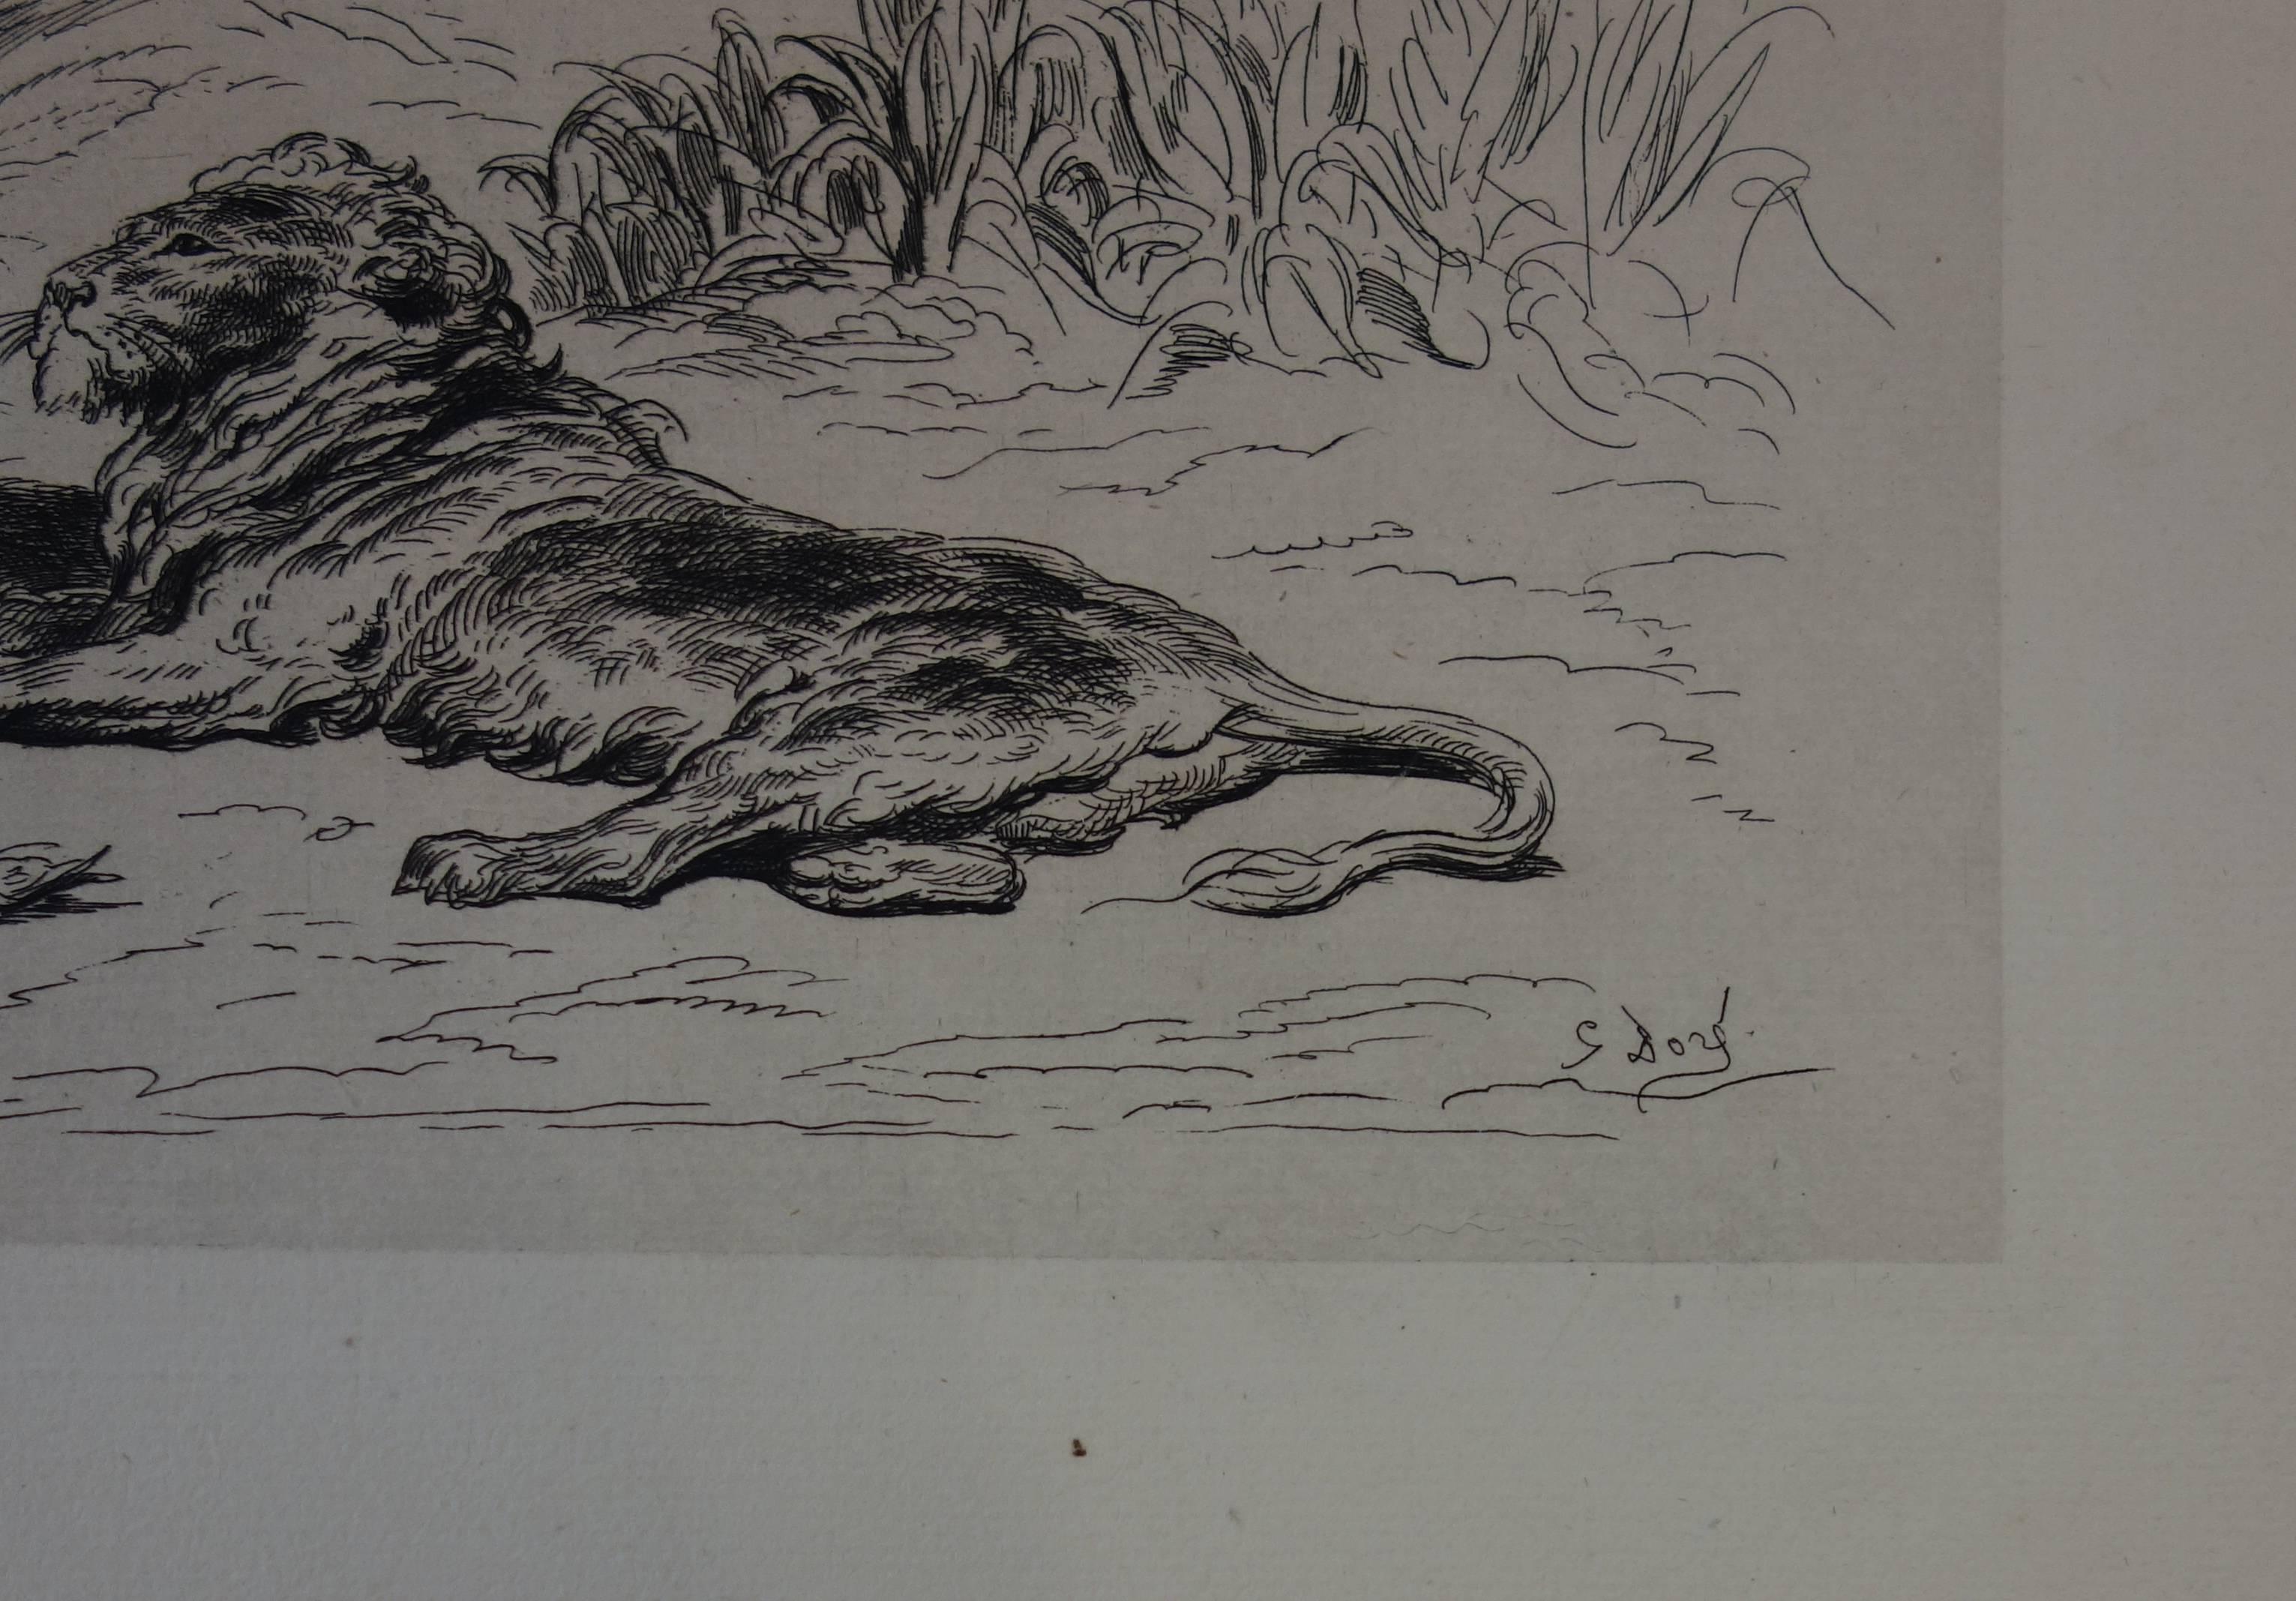 Reclining Lion - Original etching - Print by Gustave Doré